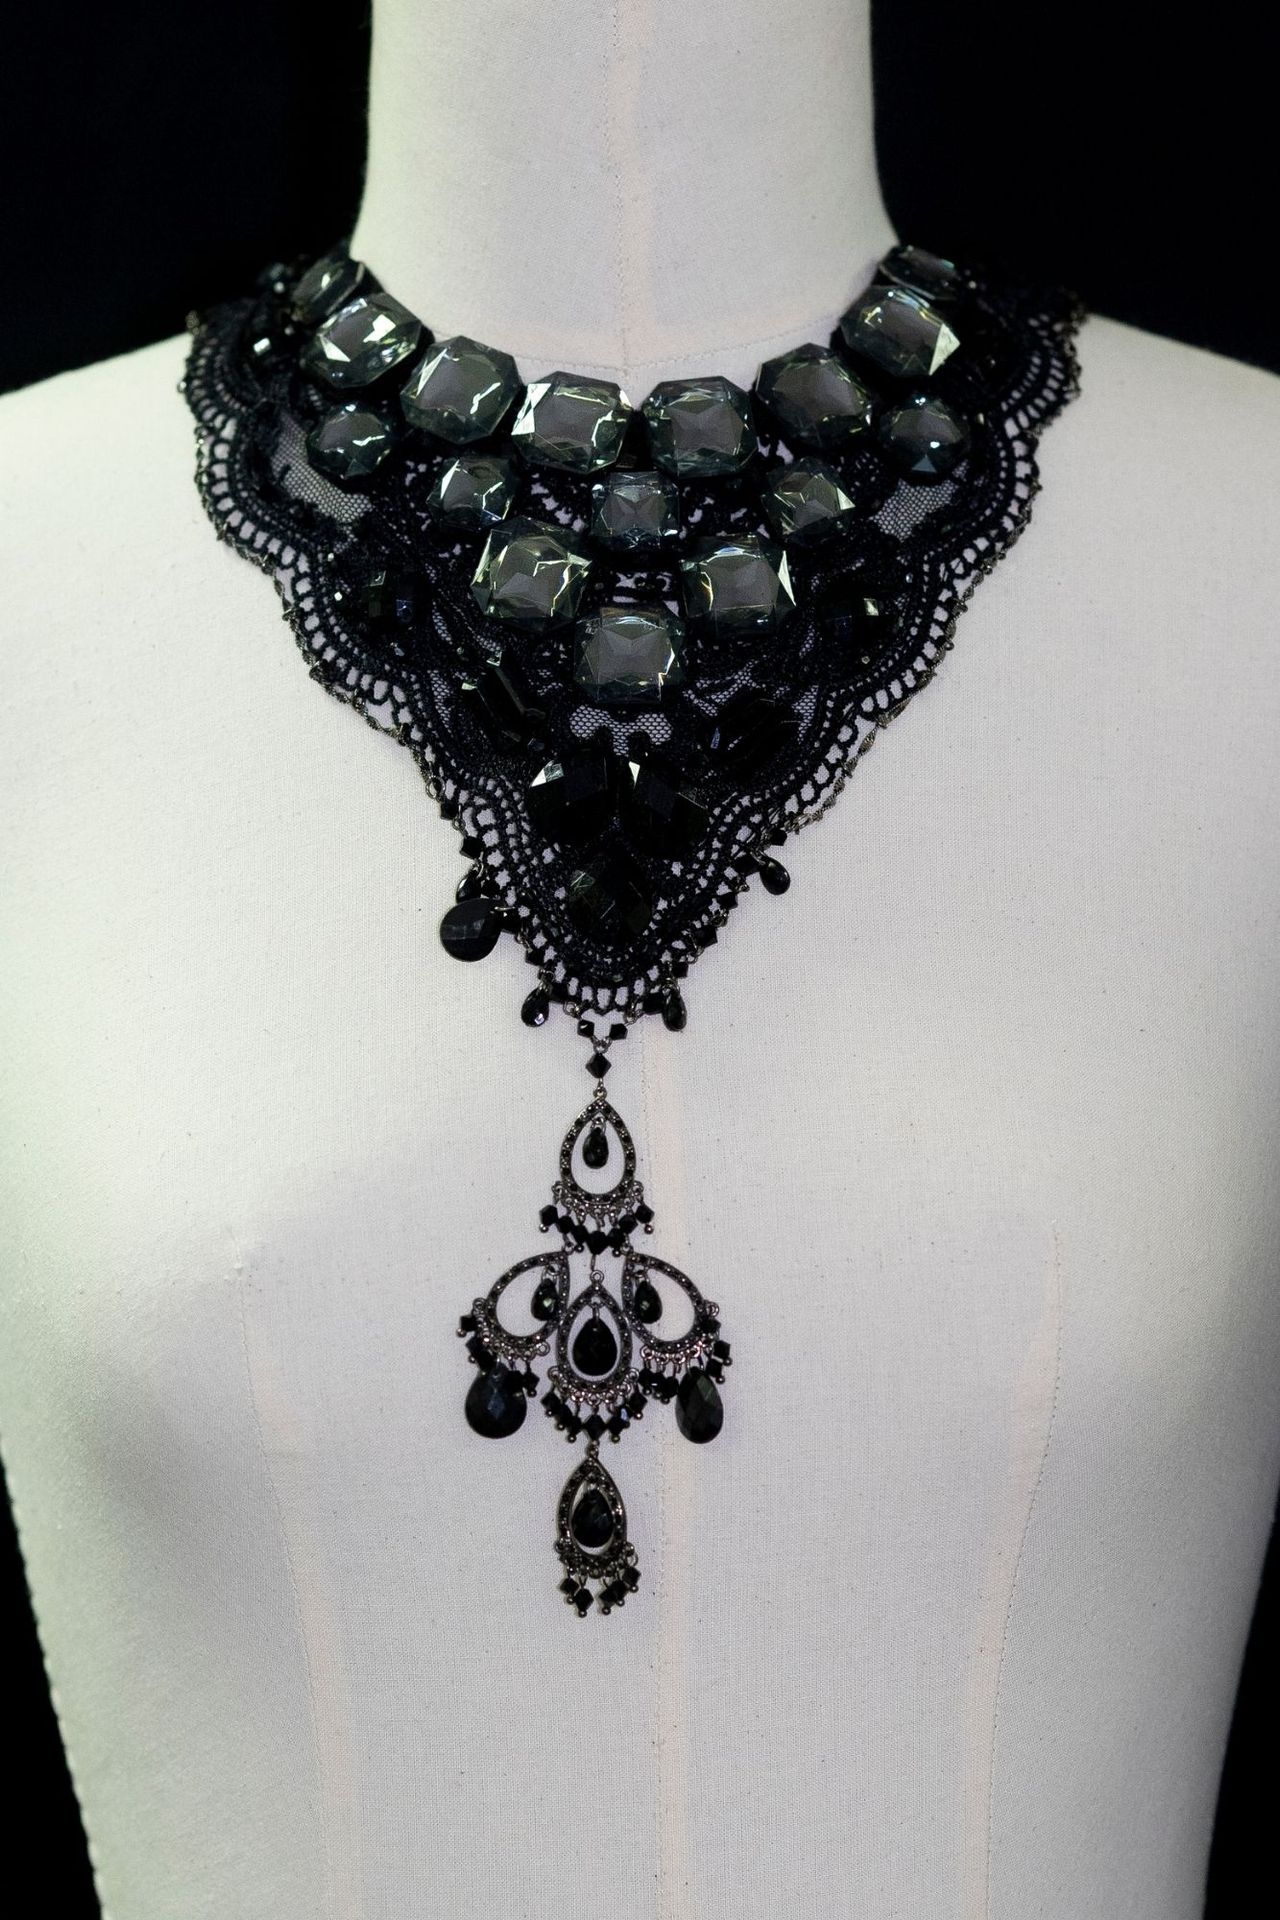 Collier "À fleur de peau" Black lace choker with openwork pendant in gray and bl&hellip;